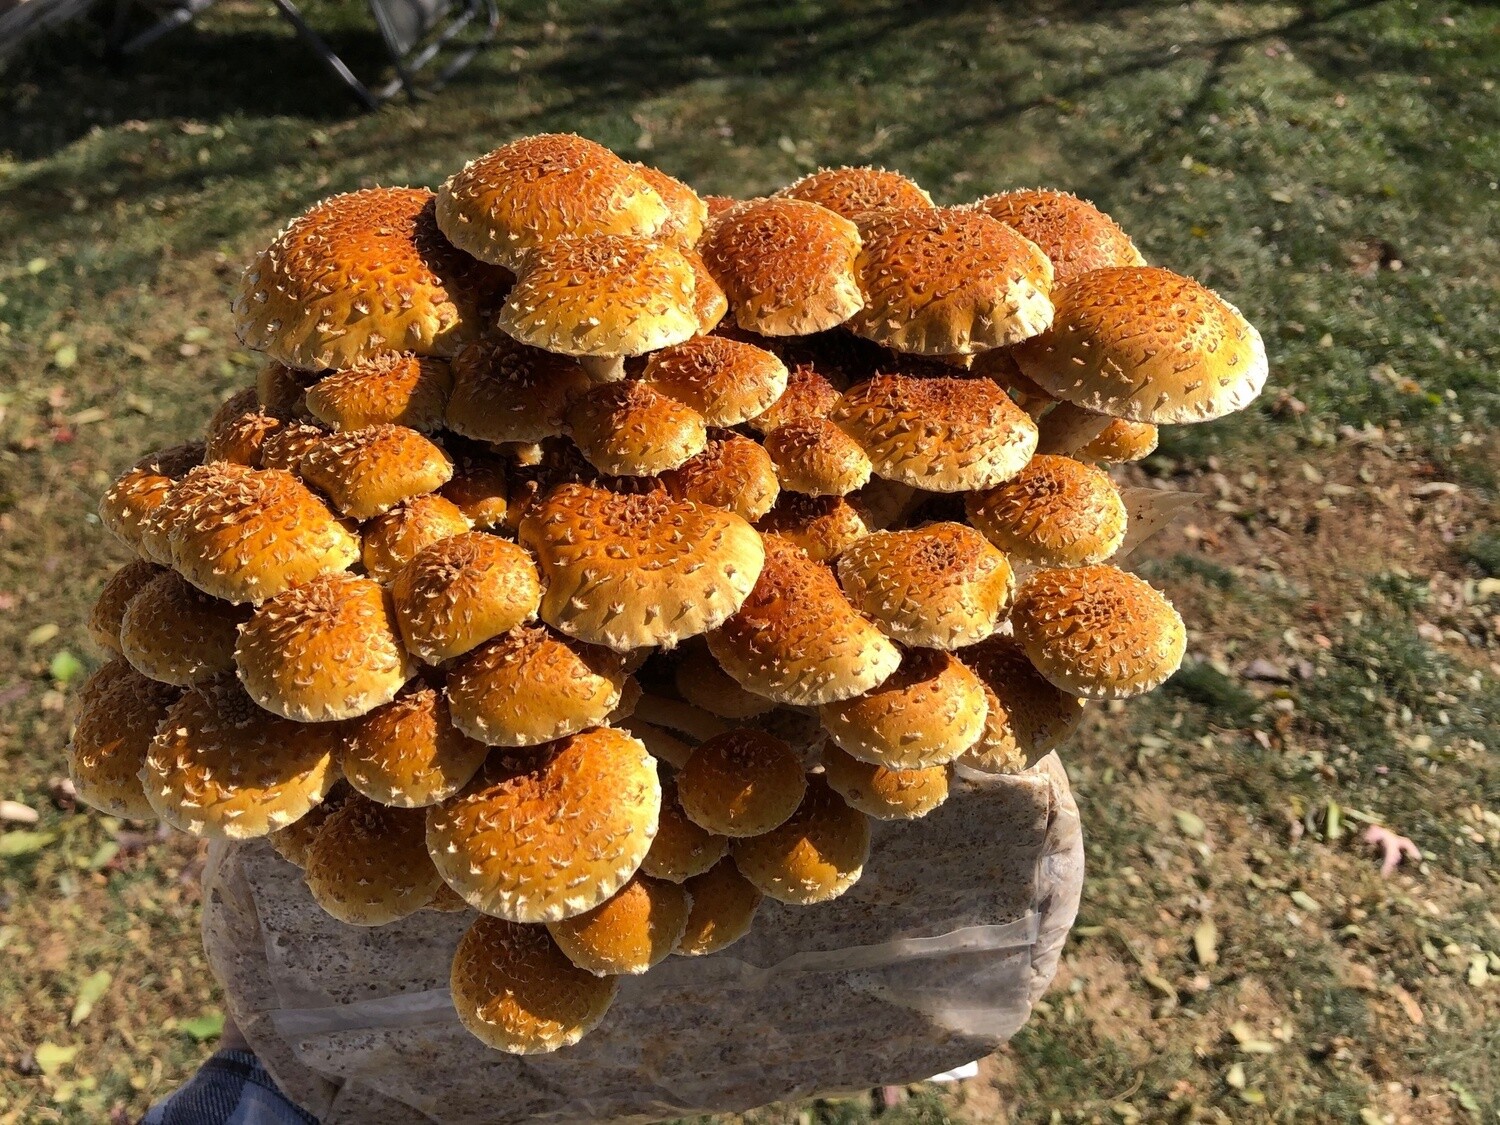 Chestnut mushrooms fresh